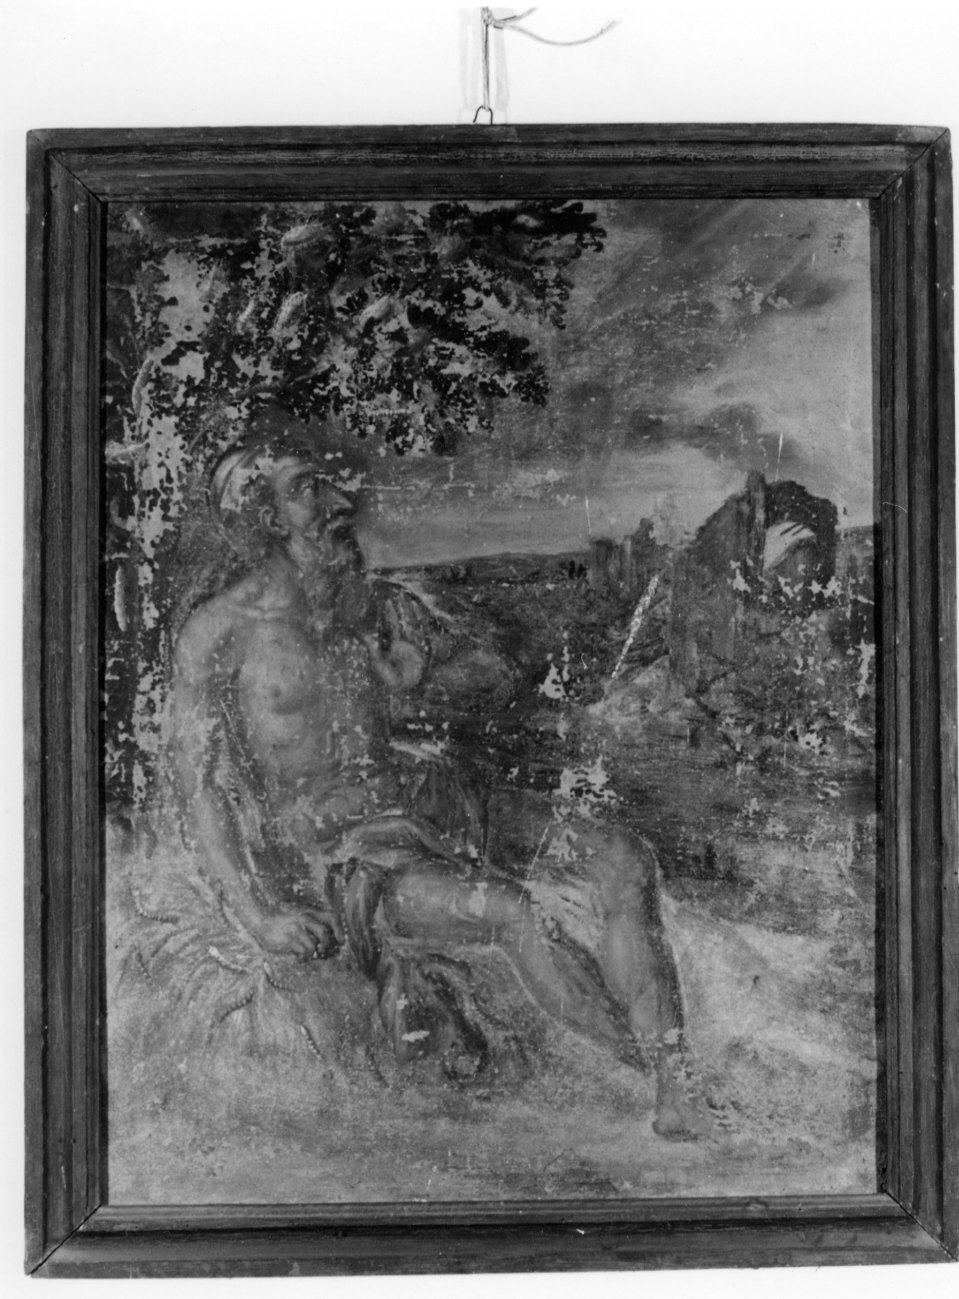 Giobbe sul letamaio (dipinto, opera isolata) - ambito piemontese (sec. XVII)